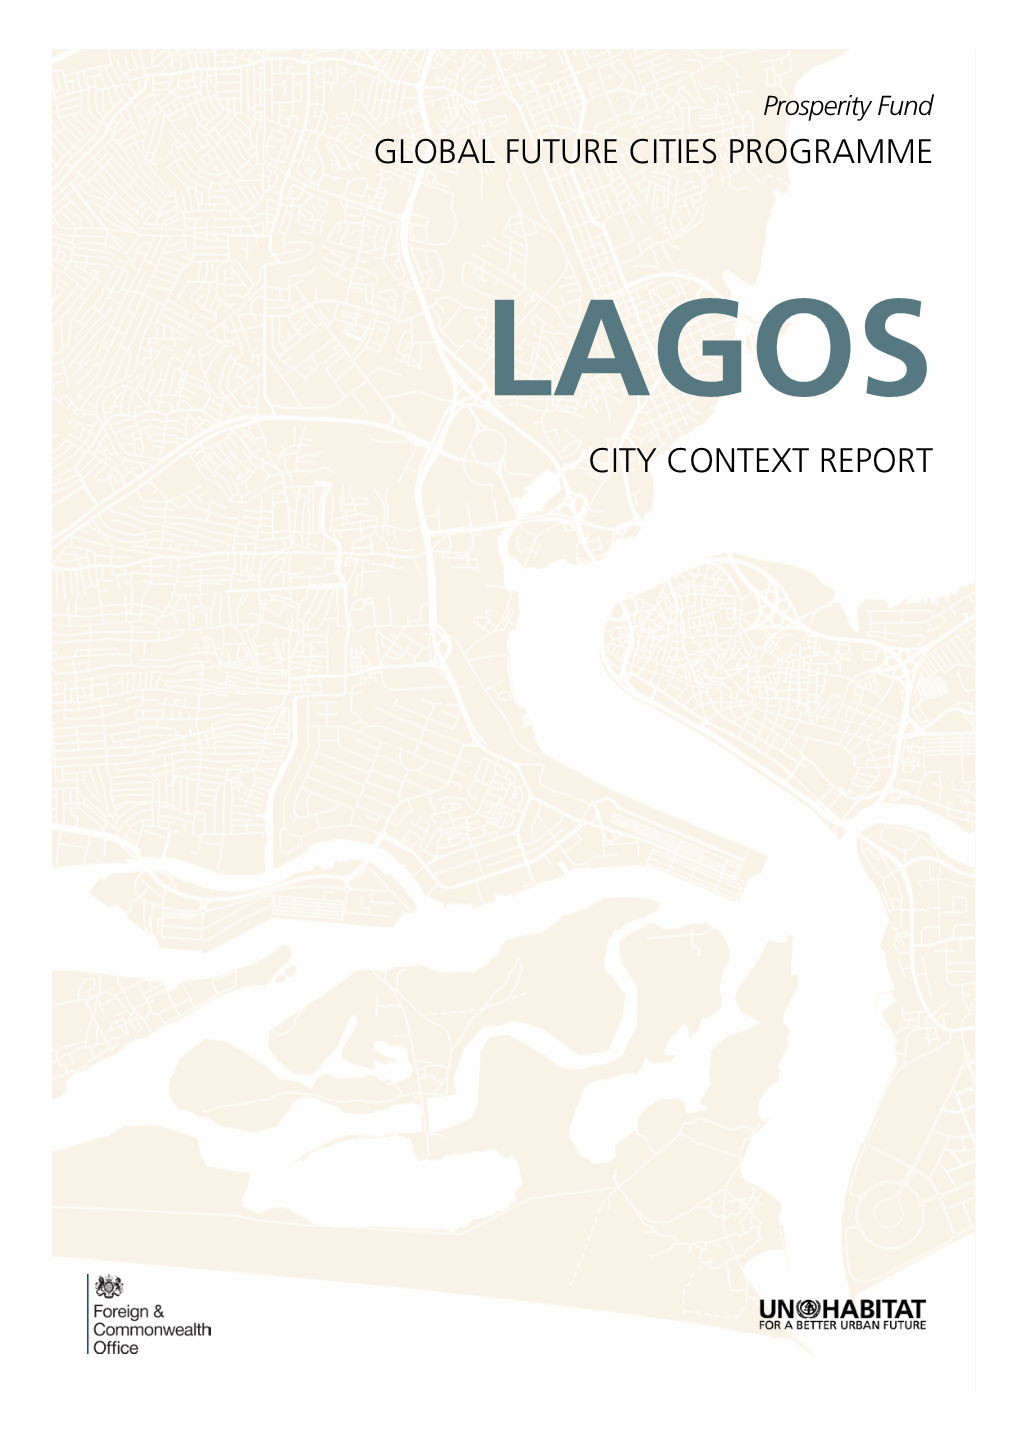 Lagos City Context Report